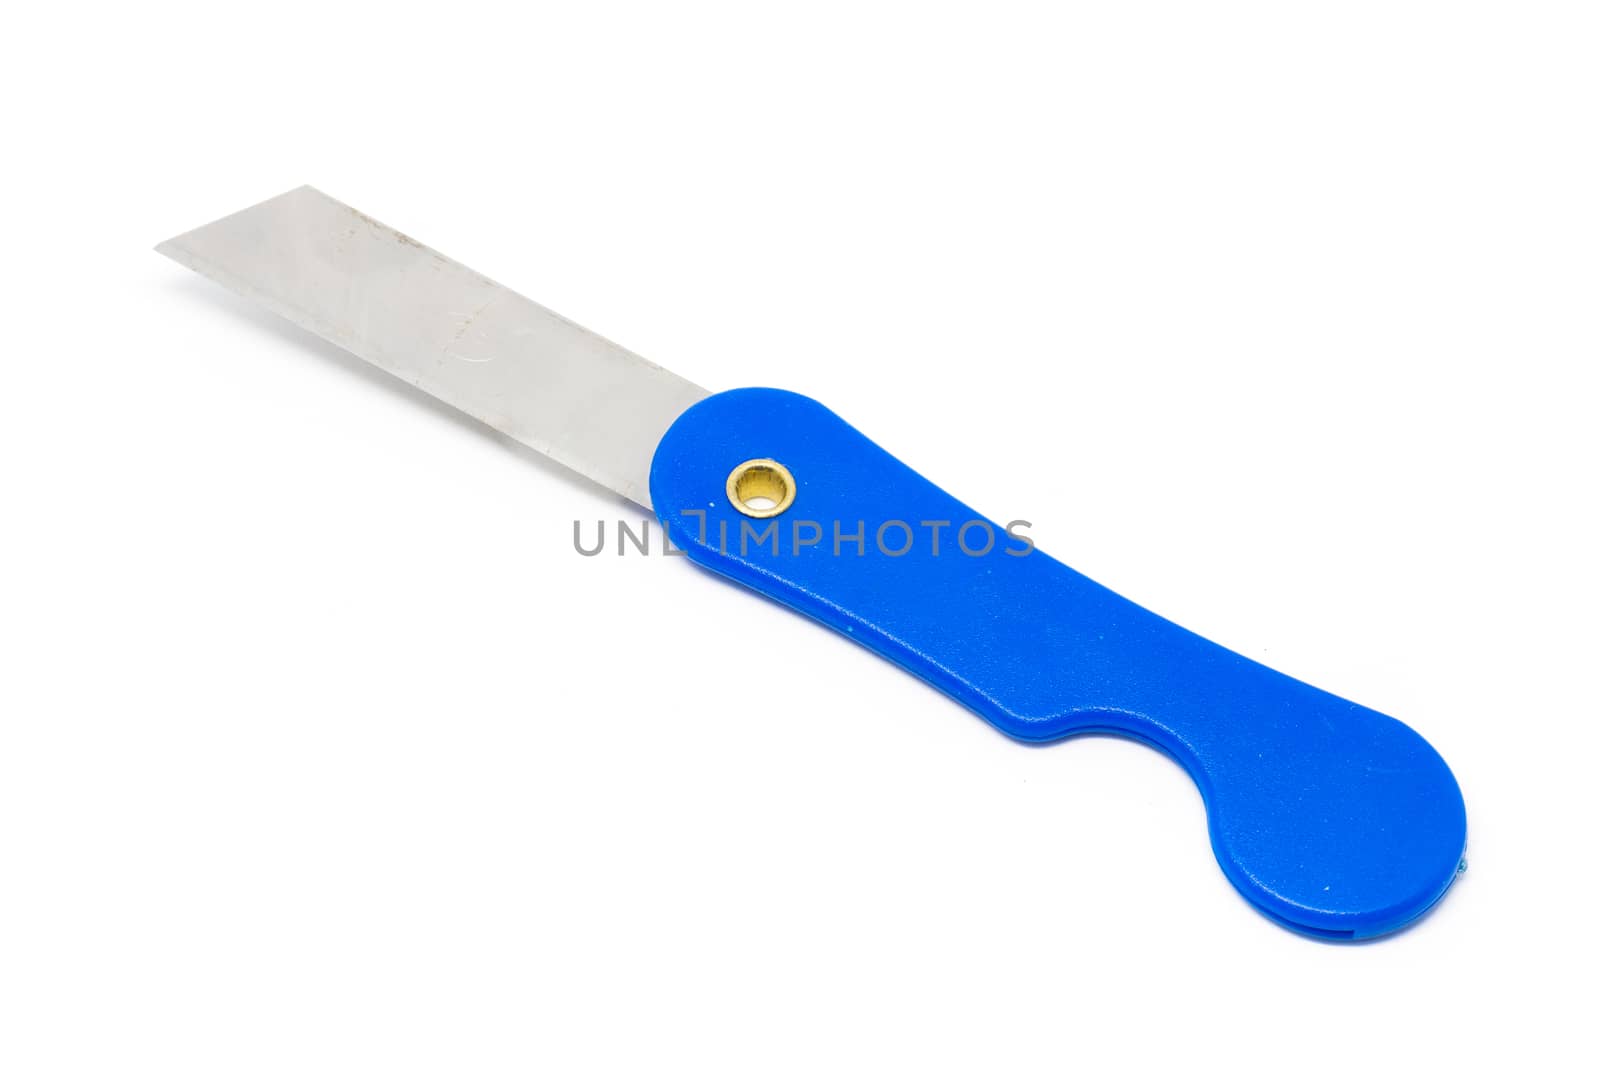 Steel knife pencil sharpener on white background.